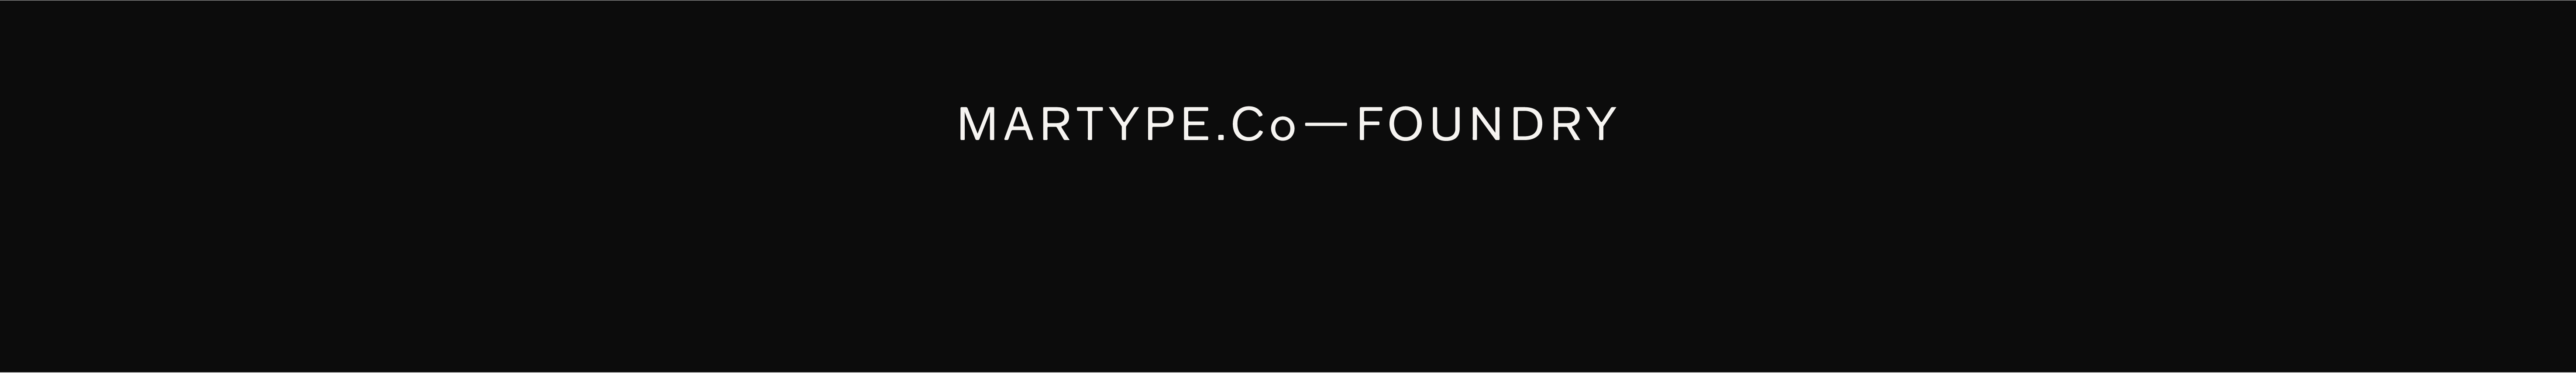 MartypeCo Foundry's profile banner